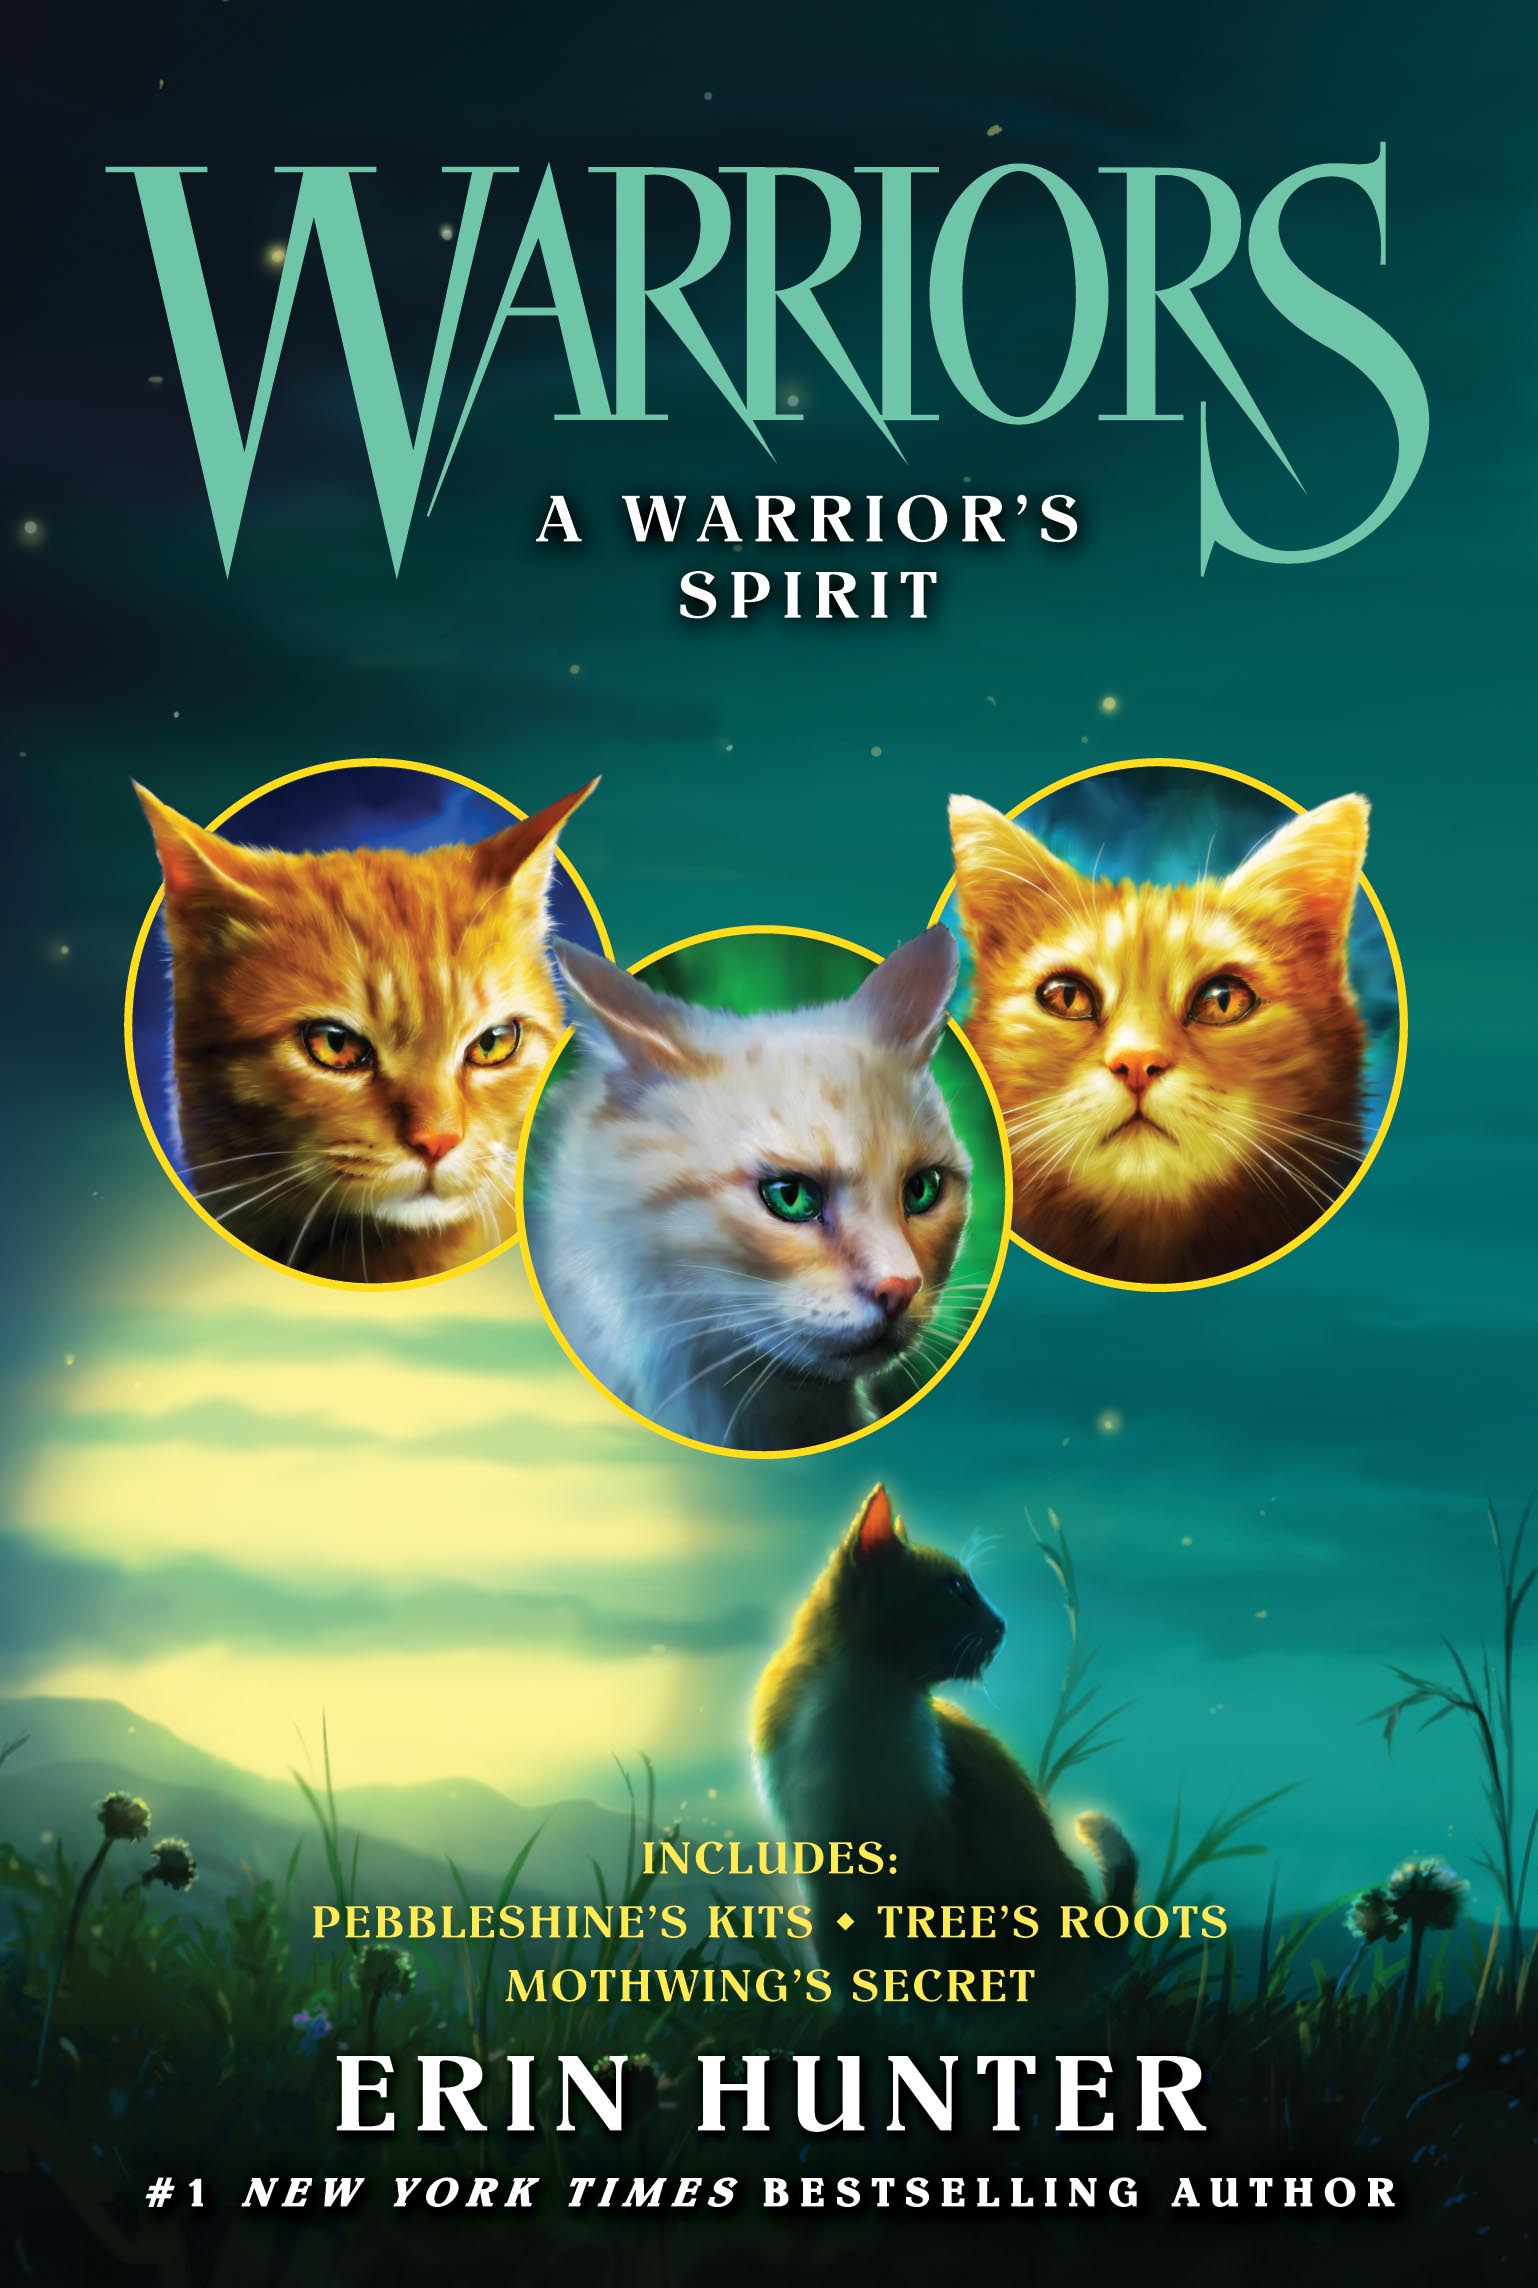 vision of shadows warriors book 3